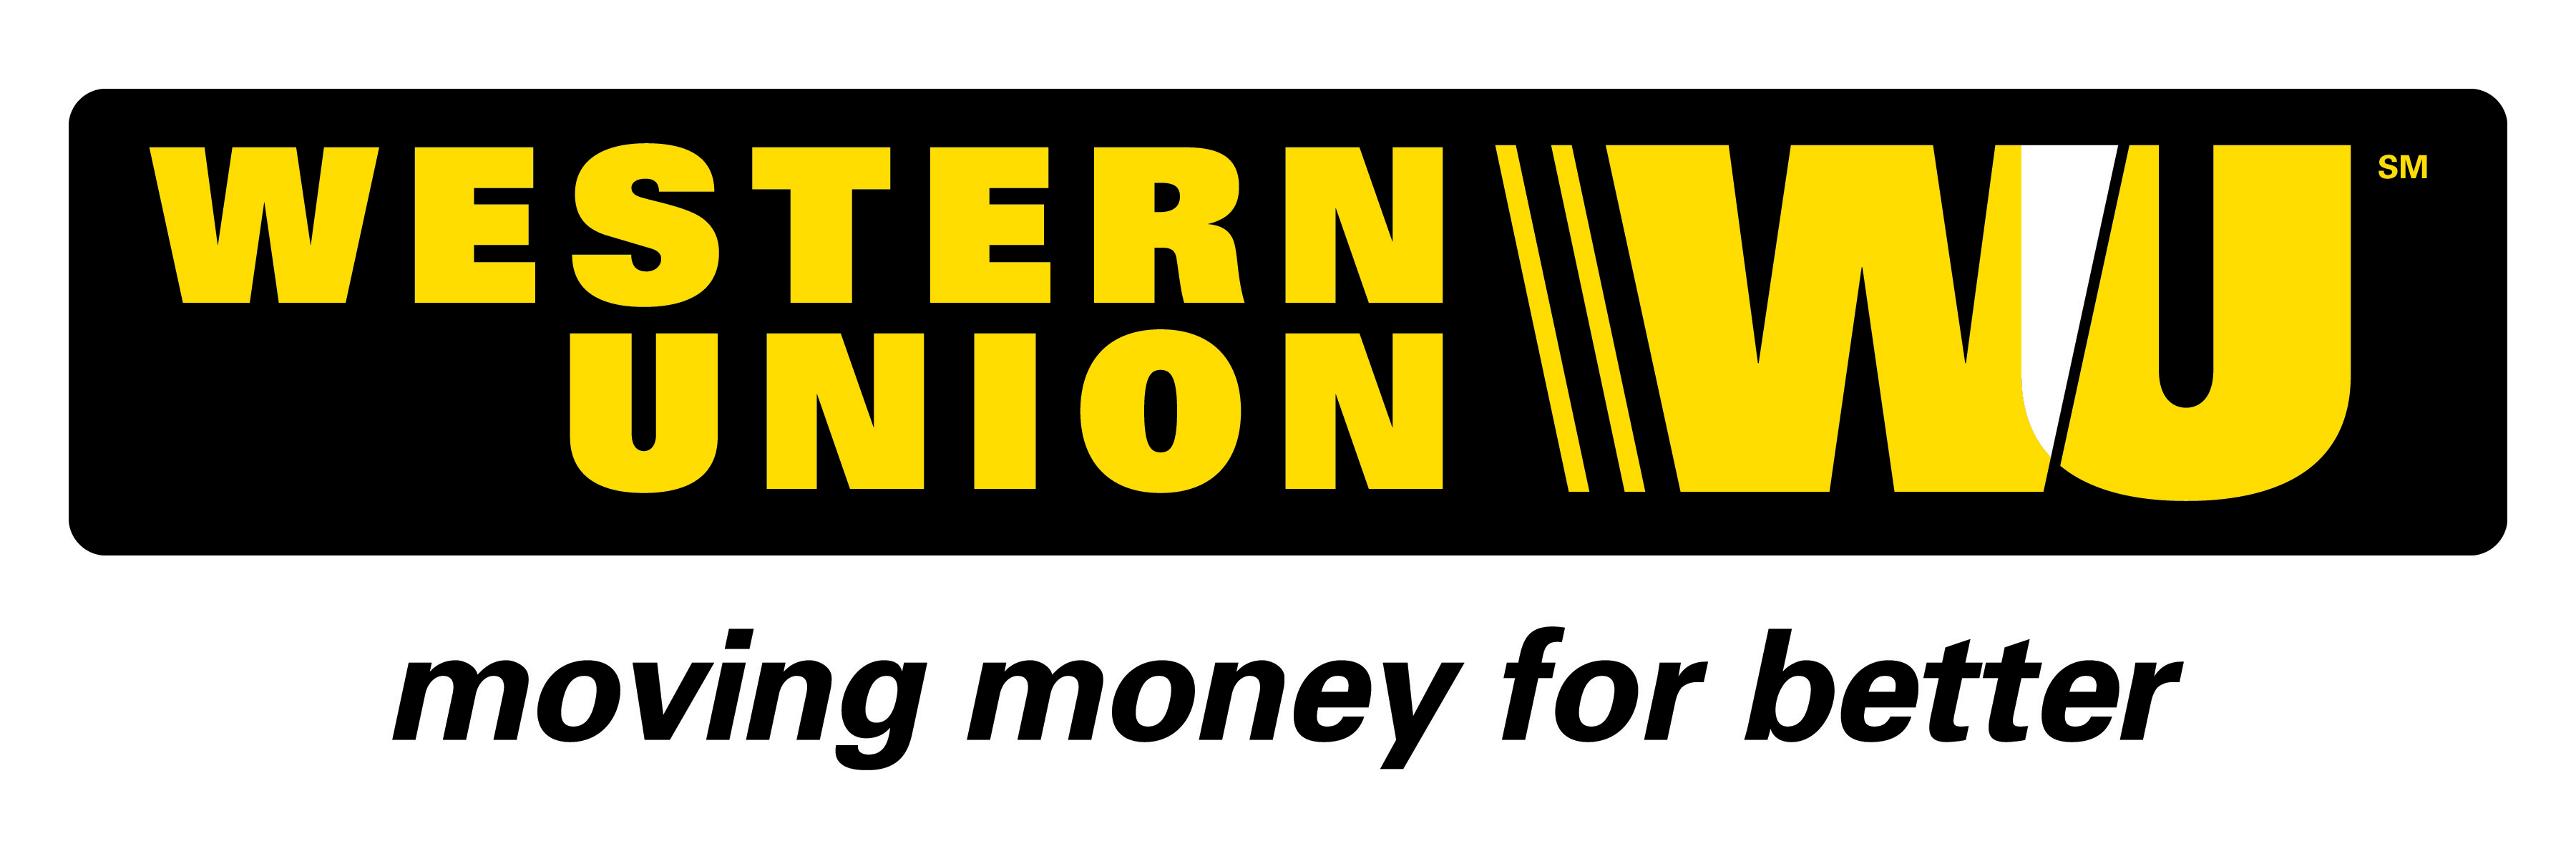 Westernunion Logo - LifeSmarts Supporter: Western Union